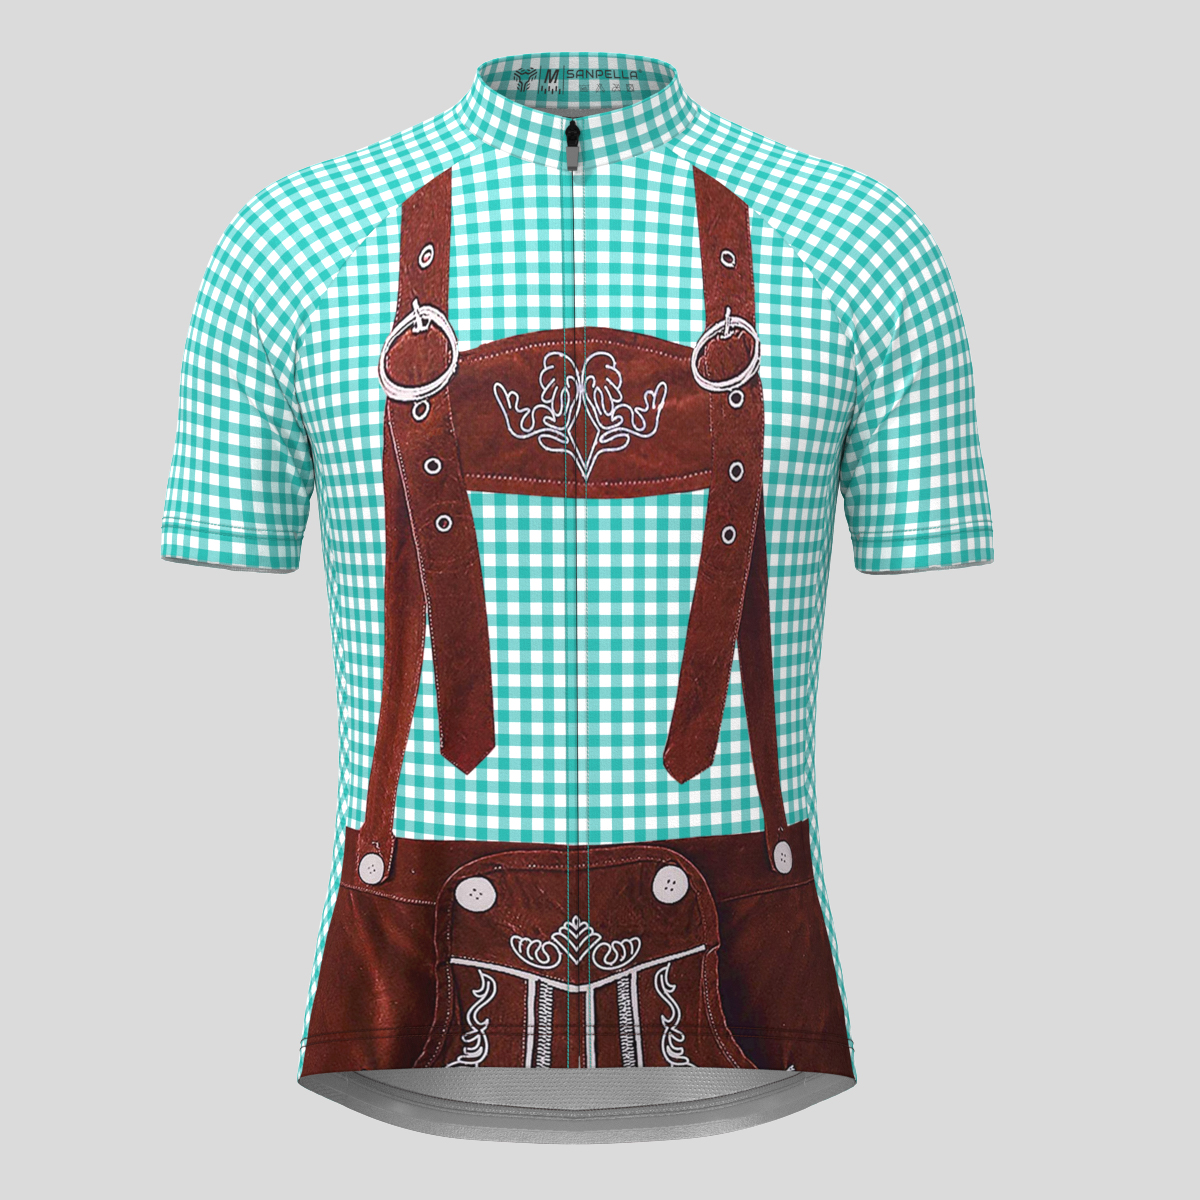 Men's Oktoberfest Costume Cycling Jersey - Green